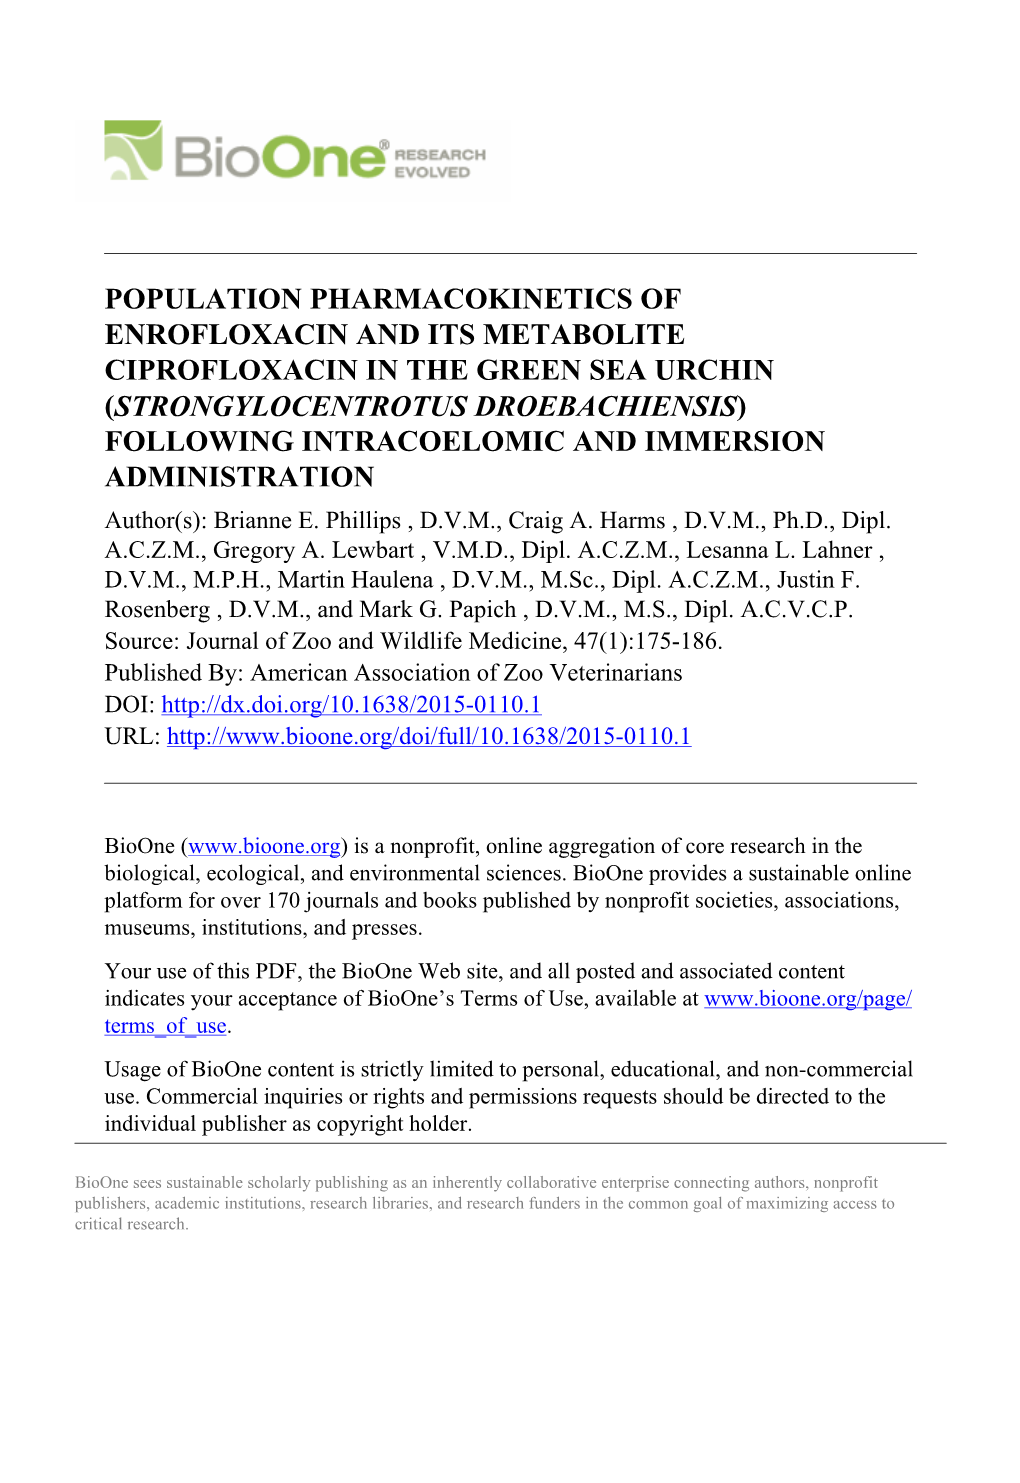 Population Pharmacokinetics of Enrofloxacin and Its Metabolite Ciprofloxacin in the Green Sea Urchin